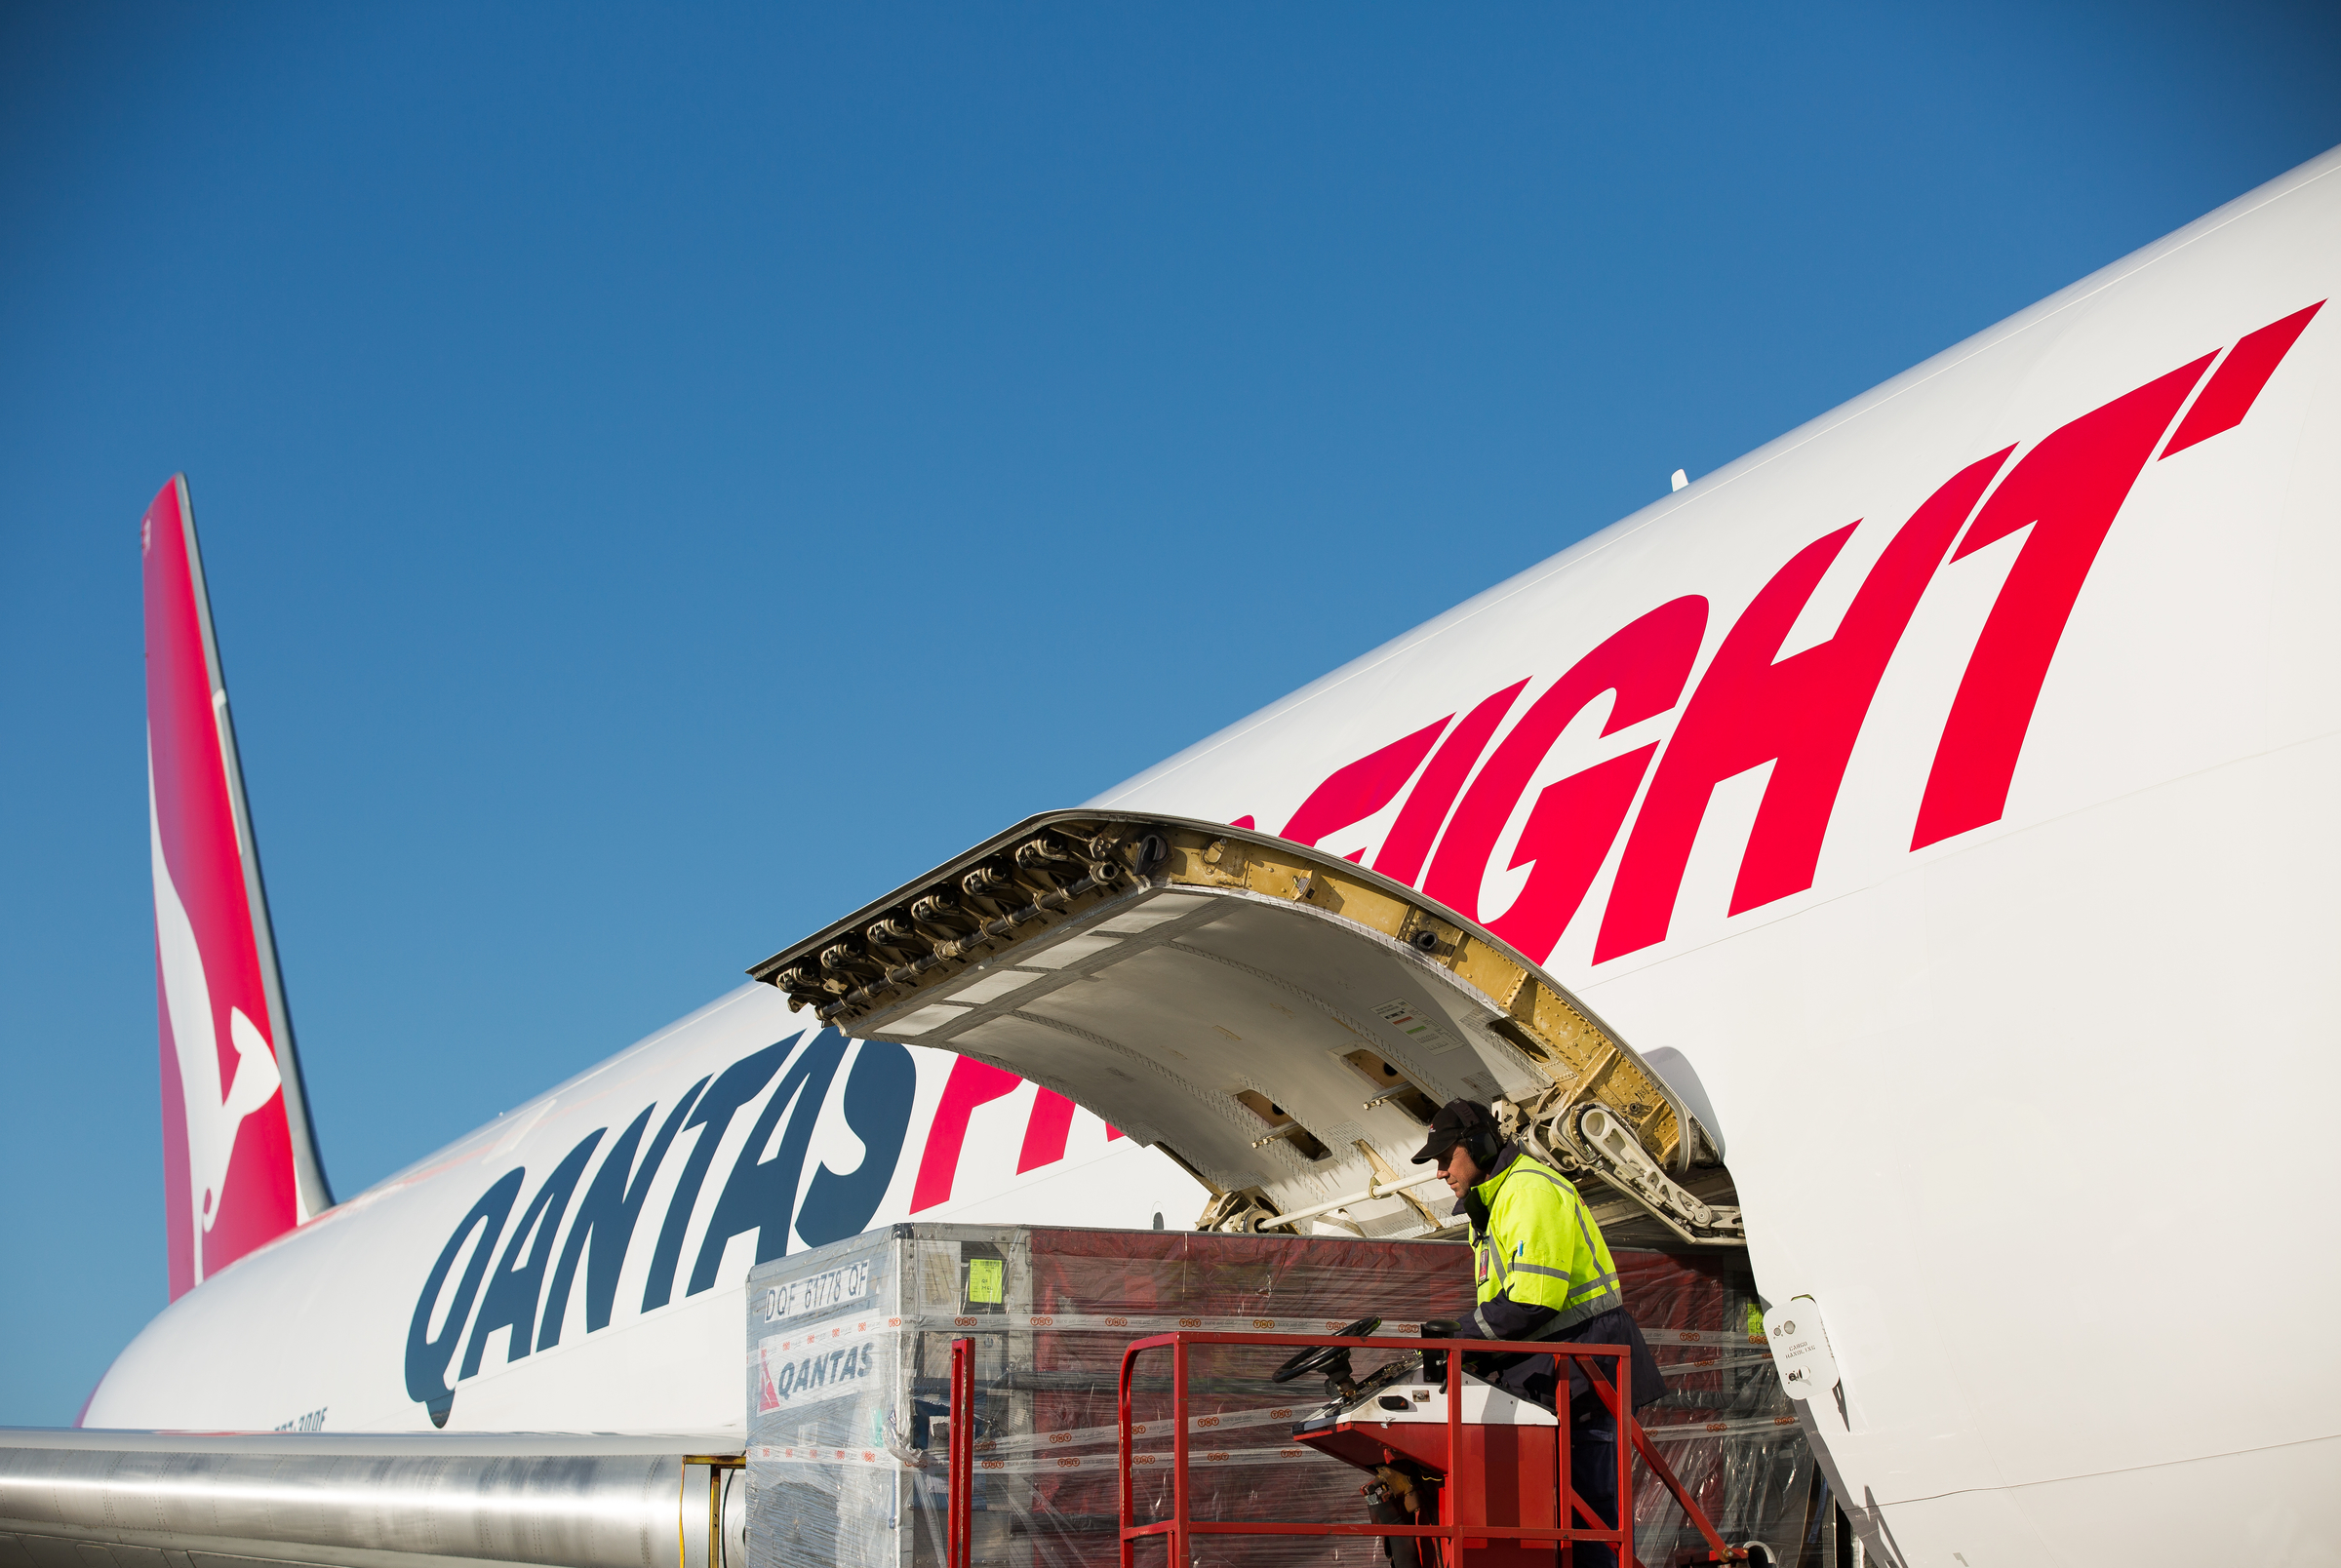 Qantas Freight at Sydney Airport